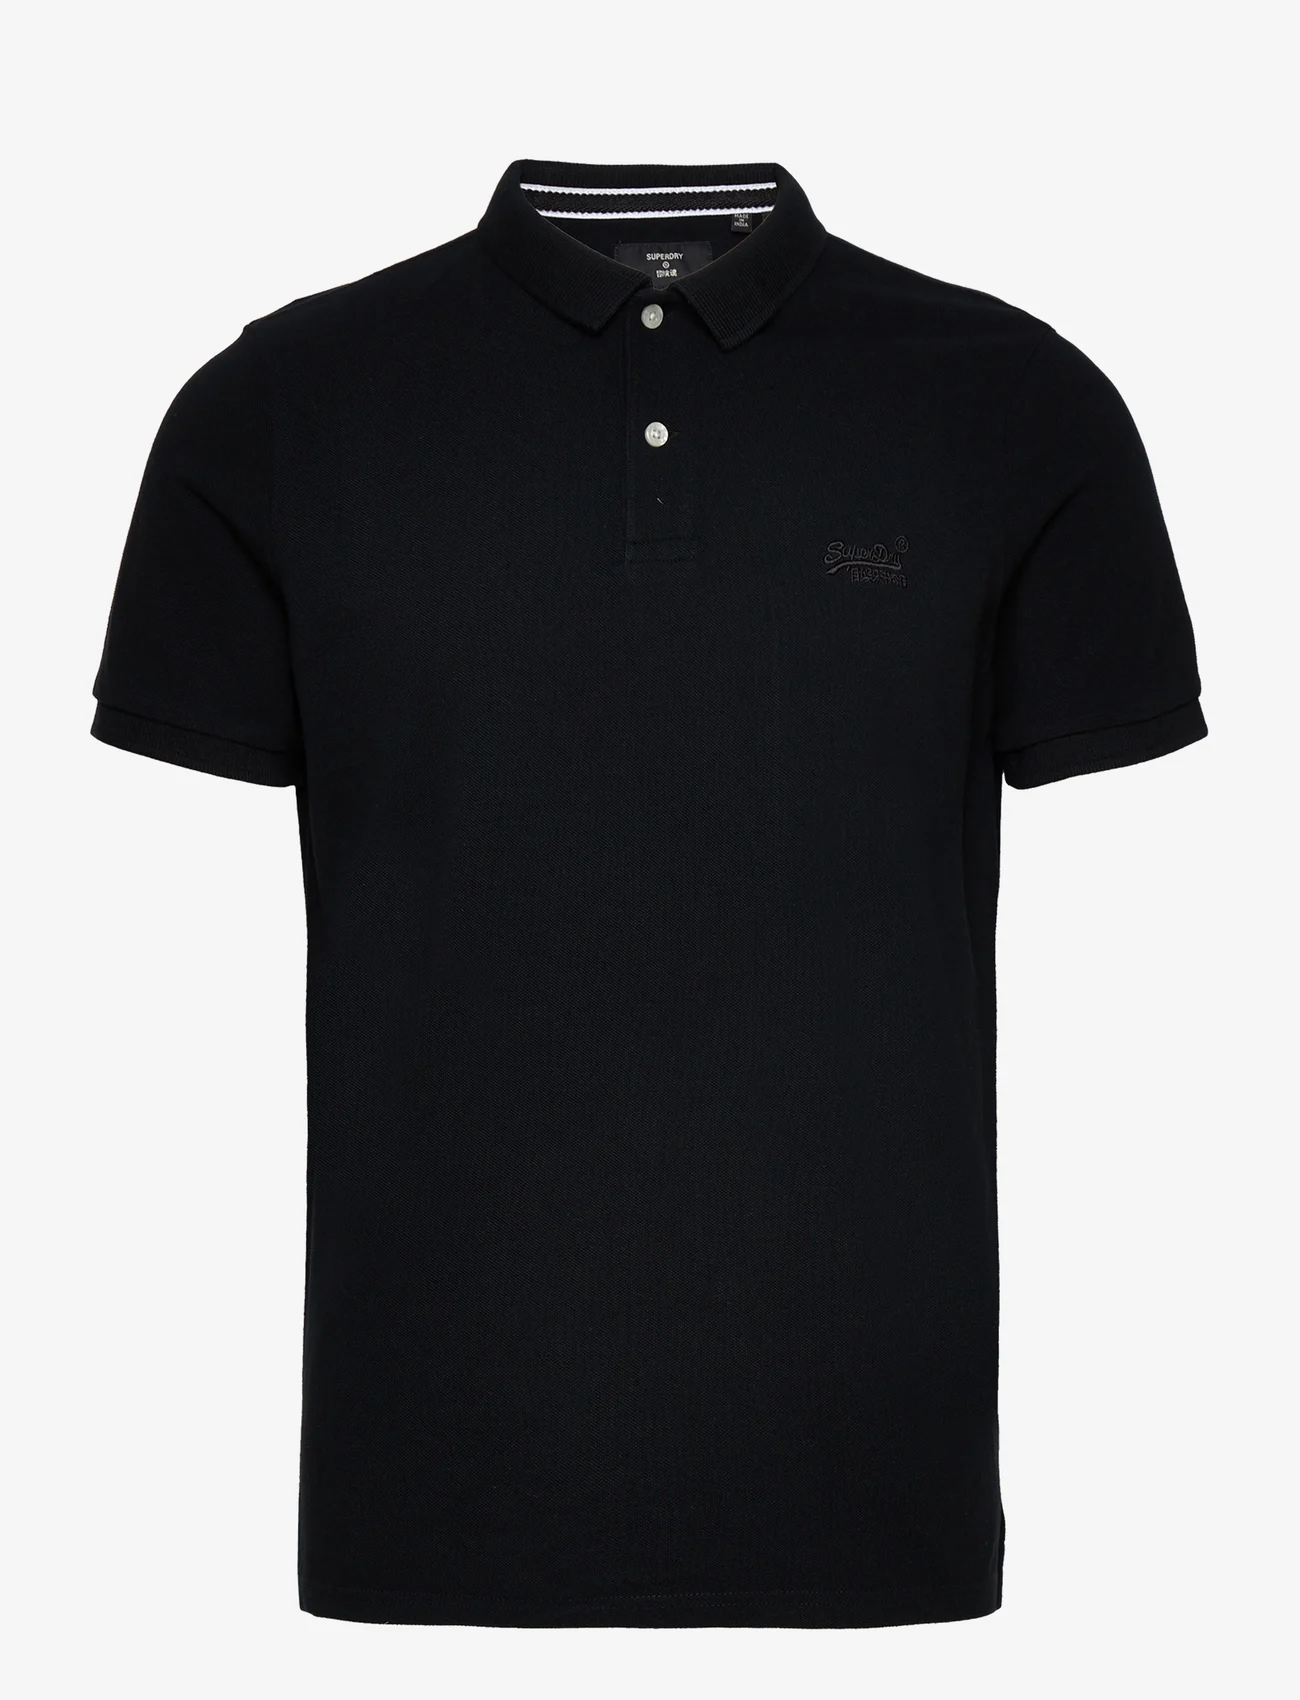 Superdry - CLASSIC PIQUE POLO - polo marškinėliai trumpomis rankovėmis - black - 0